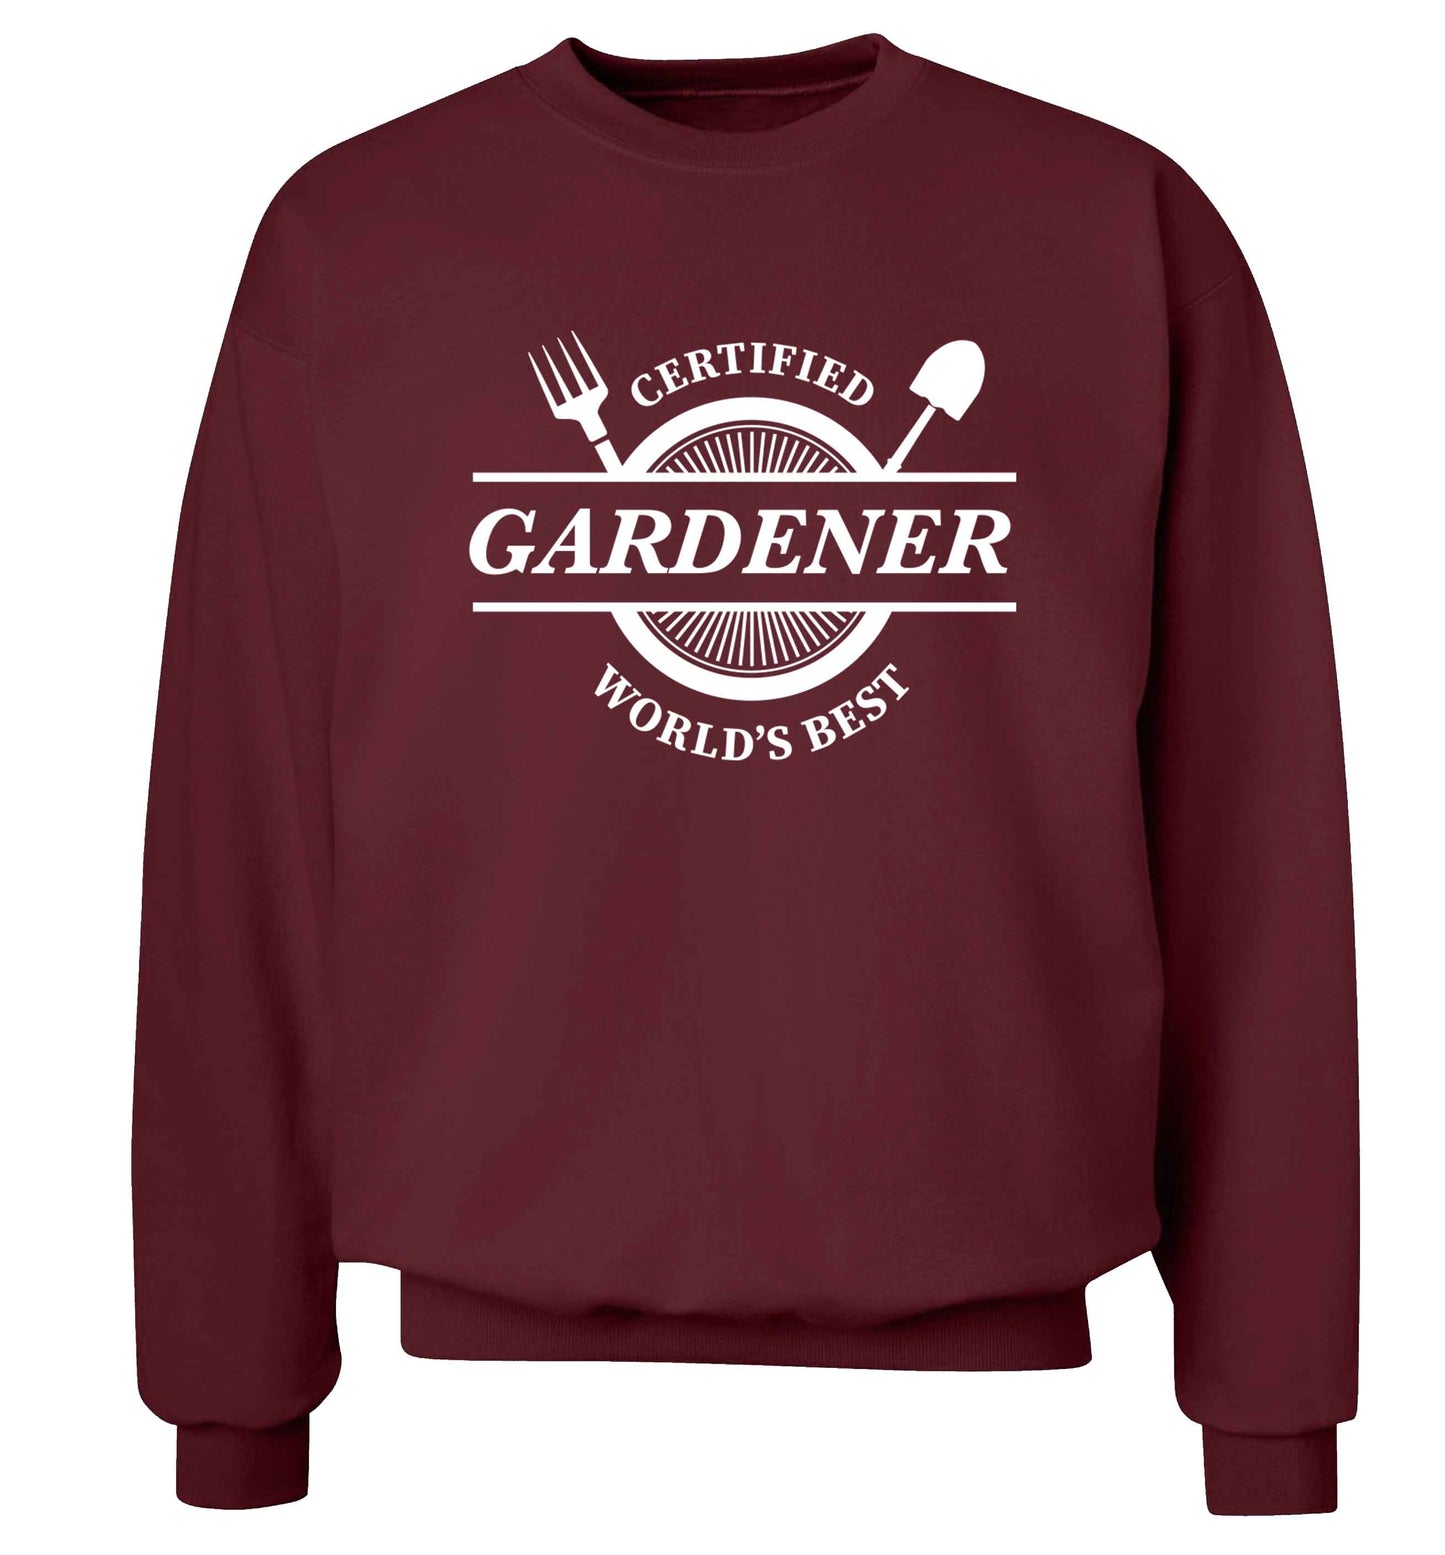 Certified gardener worlds best Adult's unisex maroon Sweater 2XL